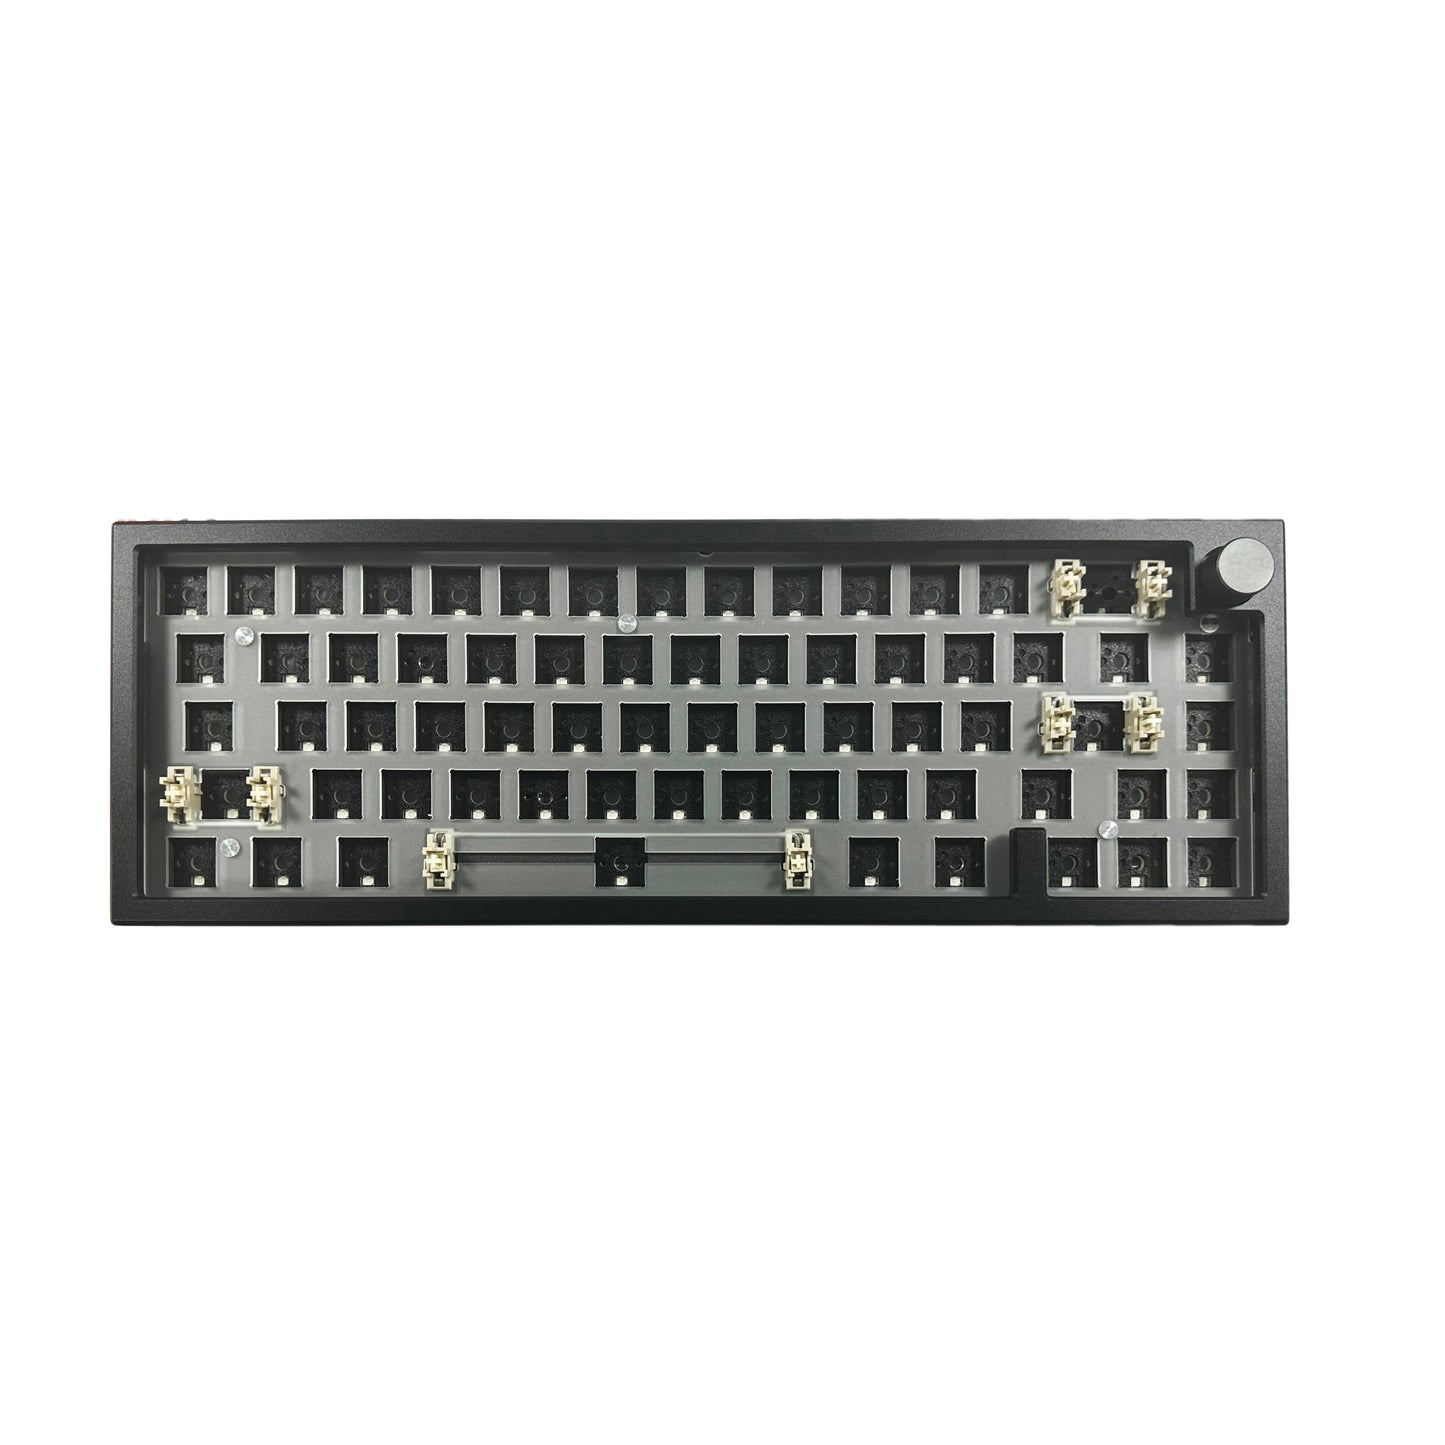 Zuoya LMK66 Aluminum Wireless Mechanical Keyboard Barebone